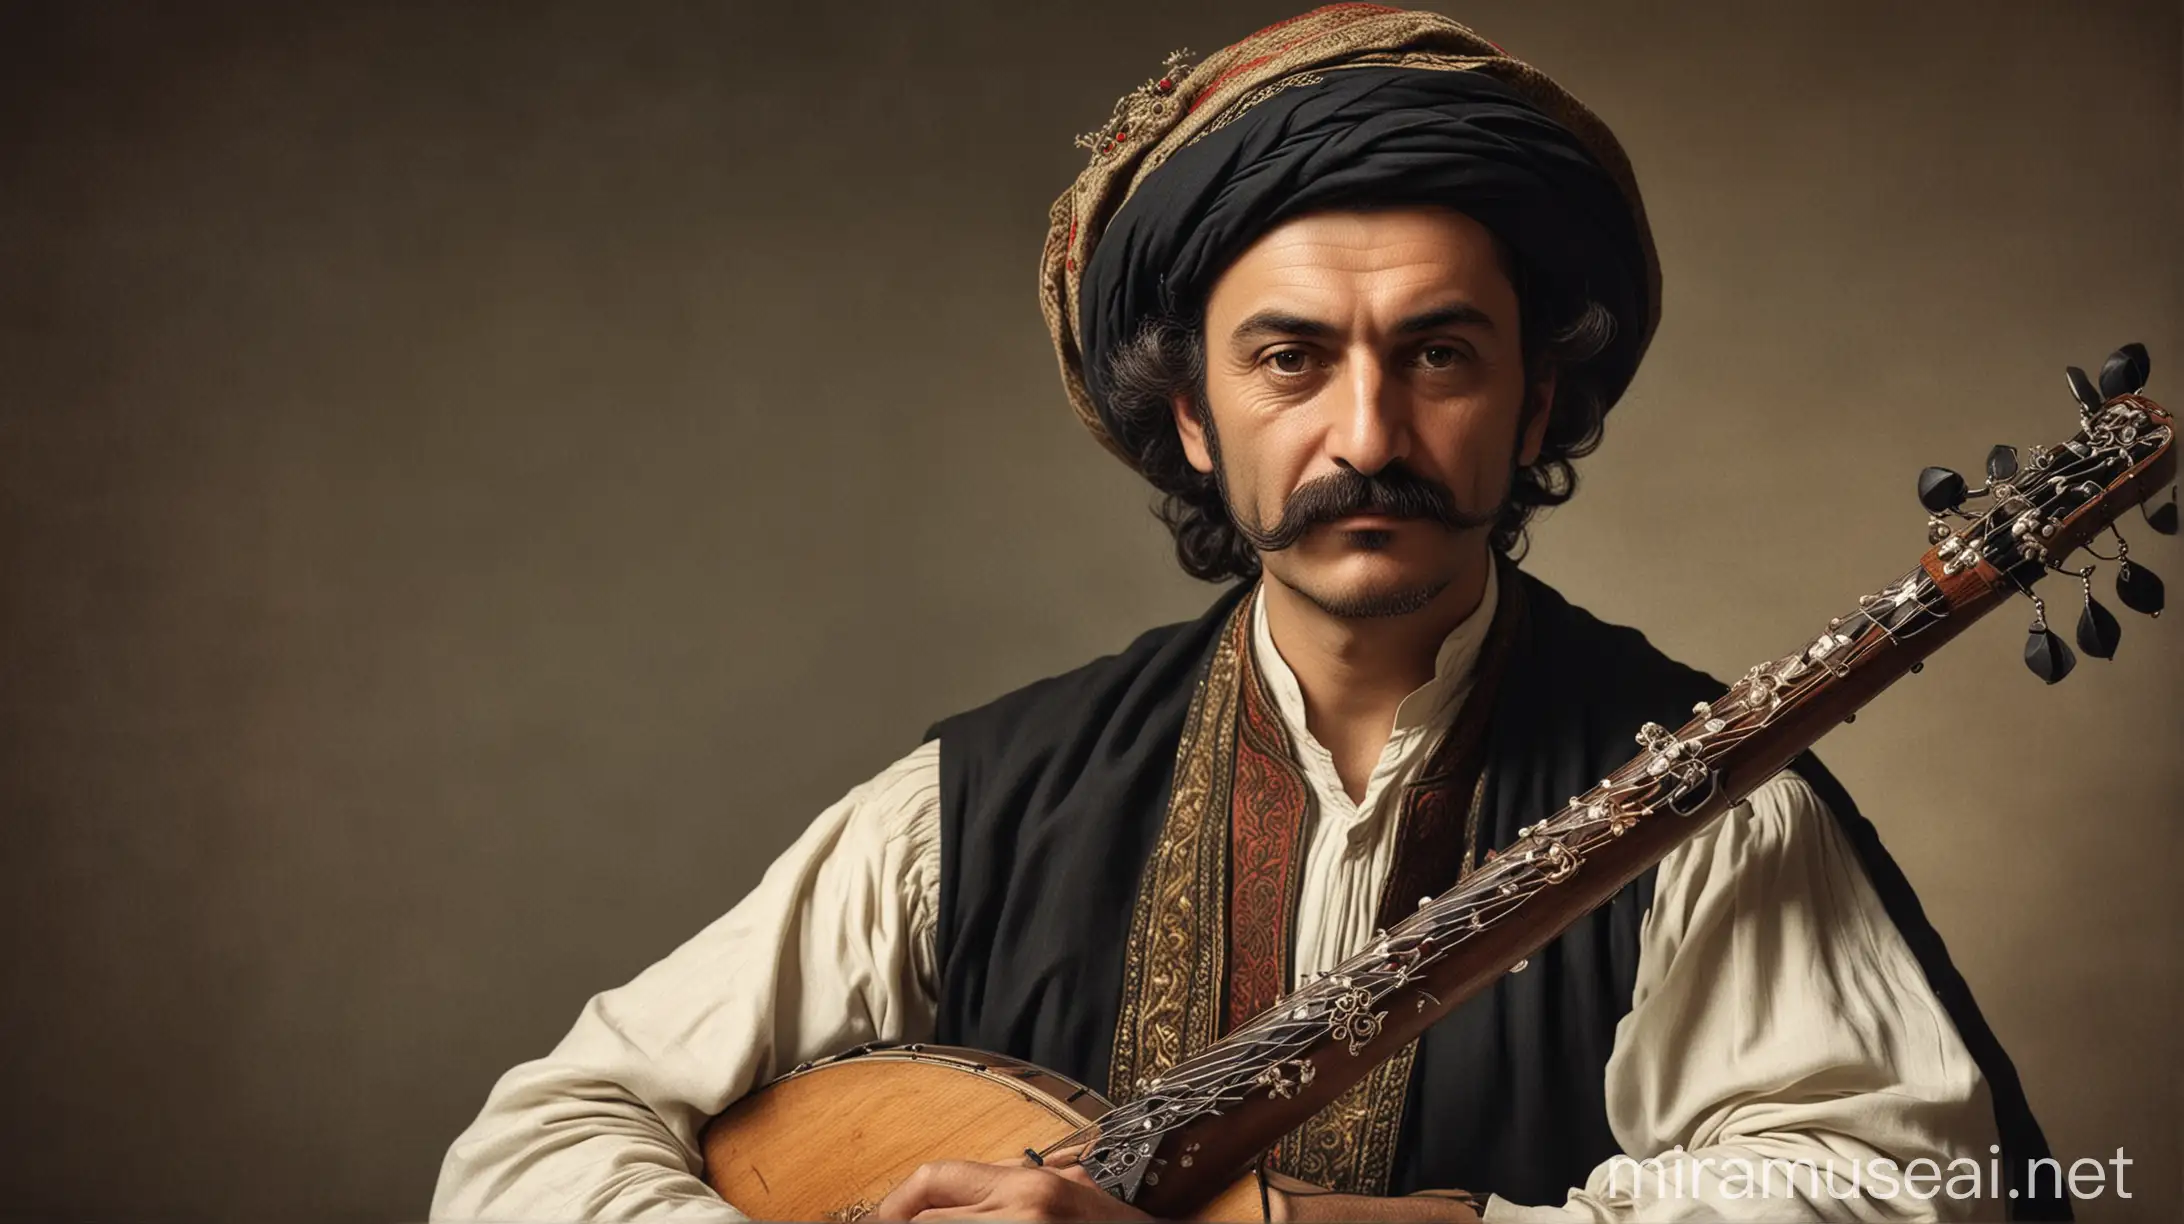 Turkish Poet with Scalpel Mustache and Saz Instrument